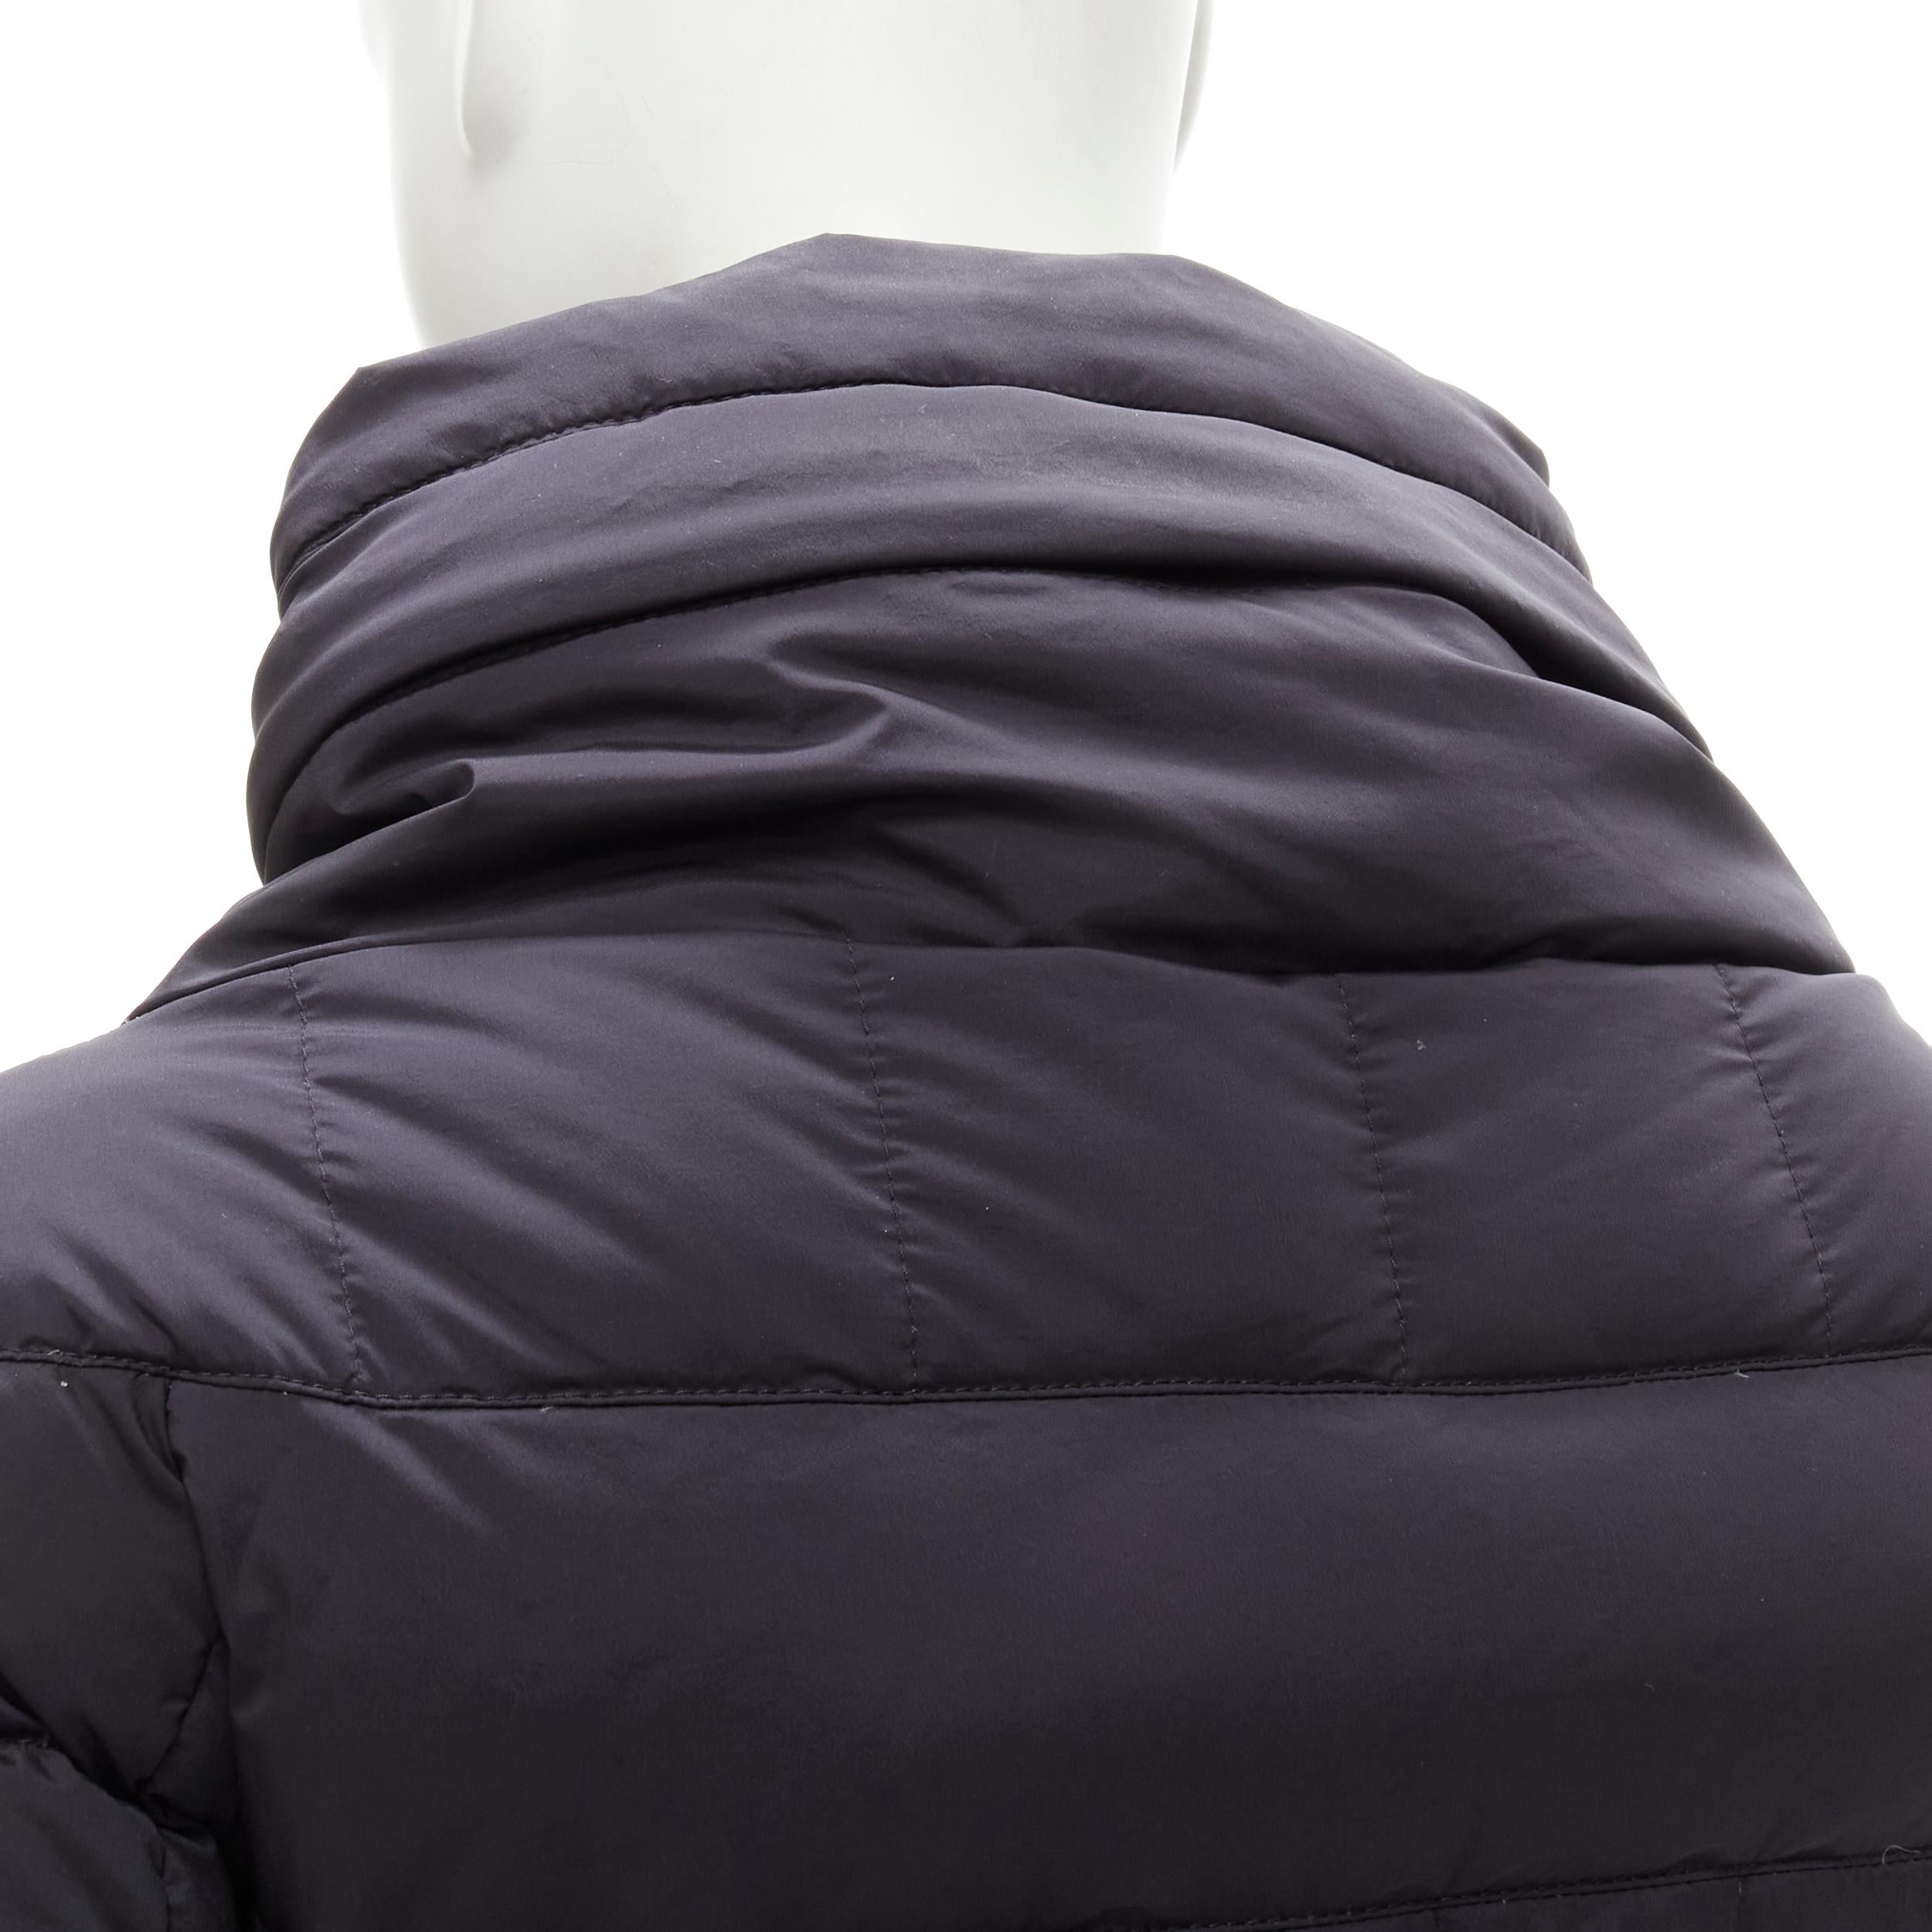 MONCLER GRENOBLE Bear Giubotto black nylon new down puffer jacket Size 1 S 3